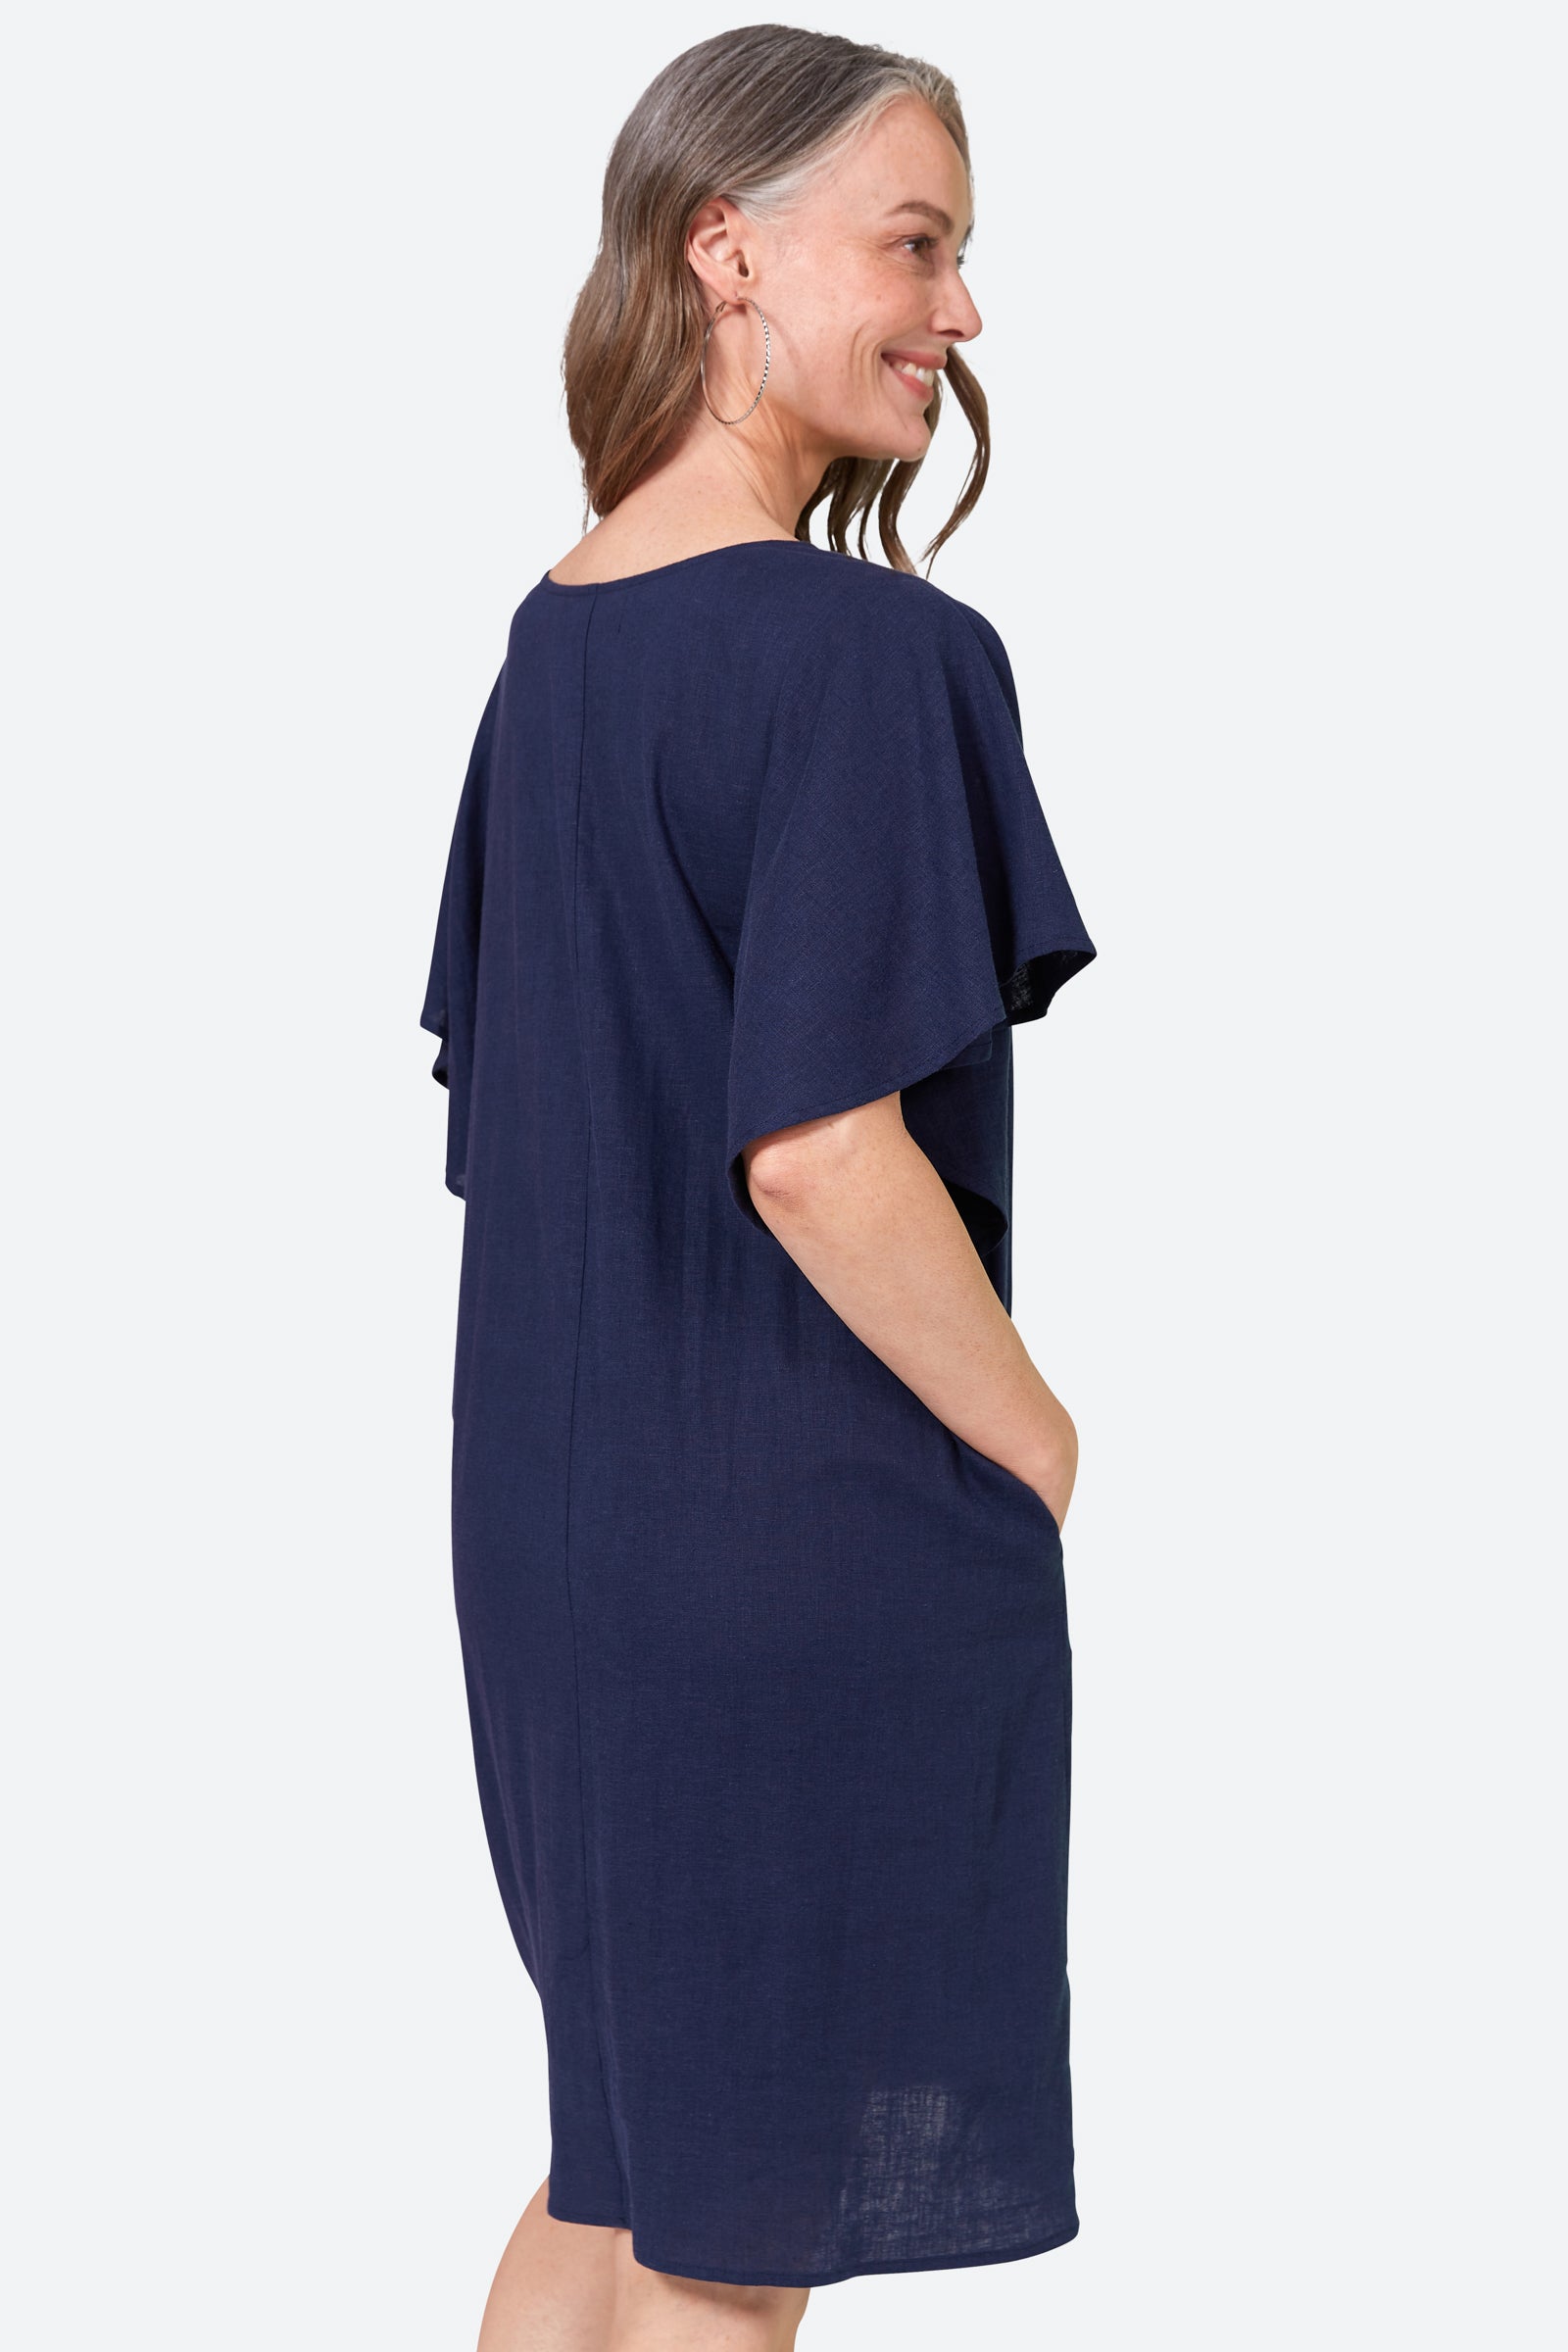 Verve Dress - Sapphire - eb&ive Clothing - Dress Mid Linen